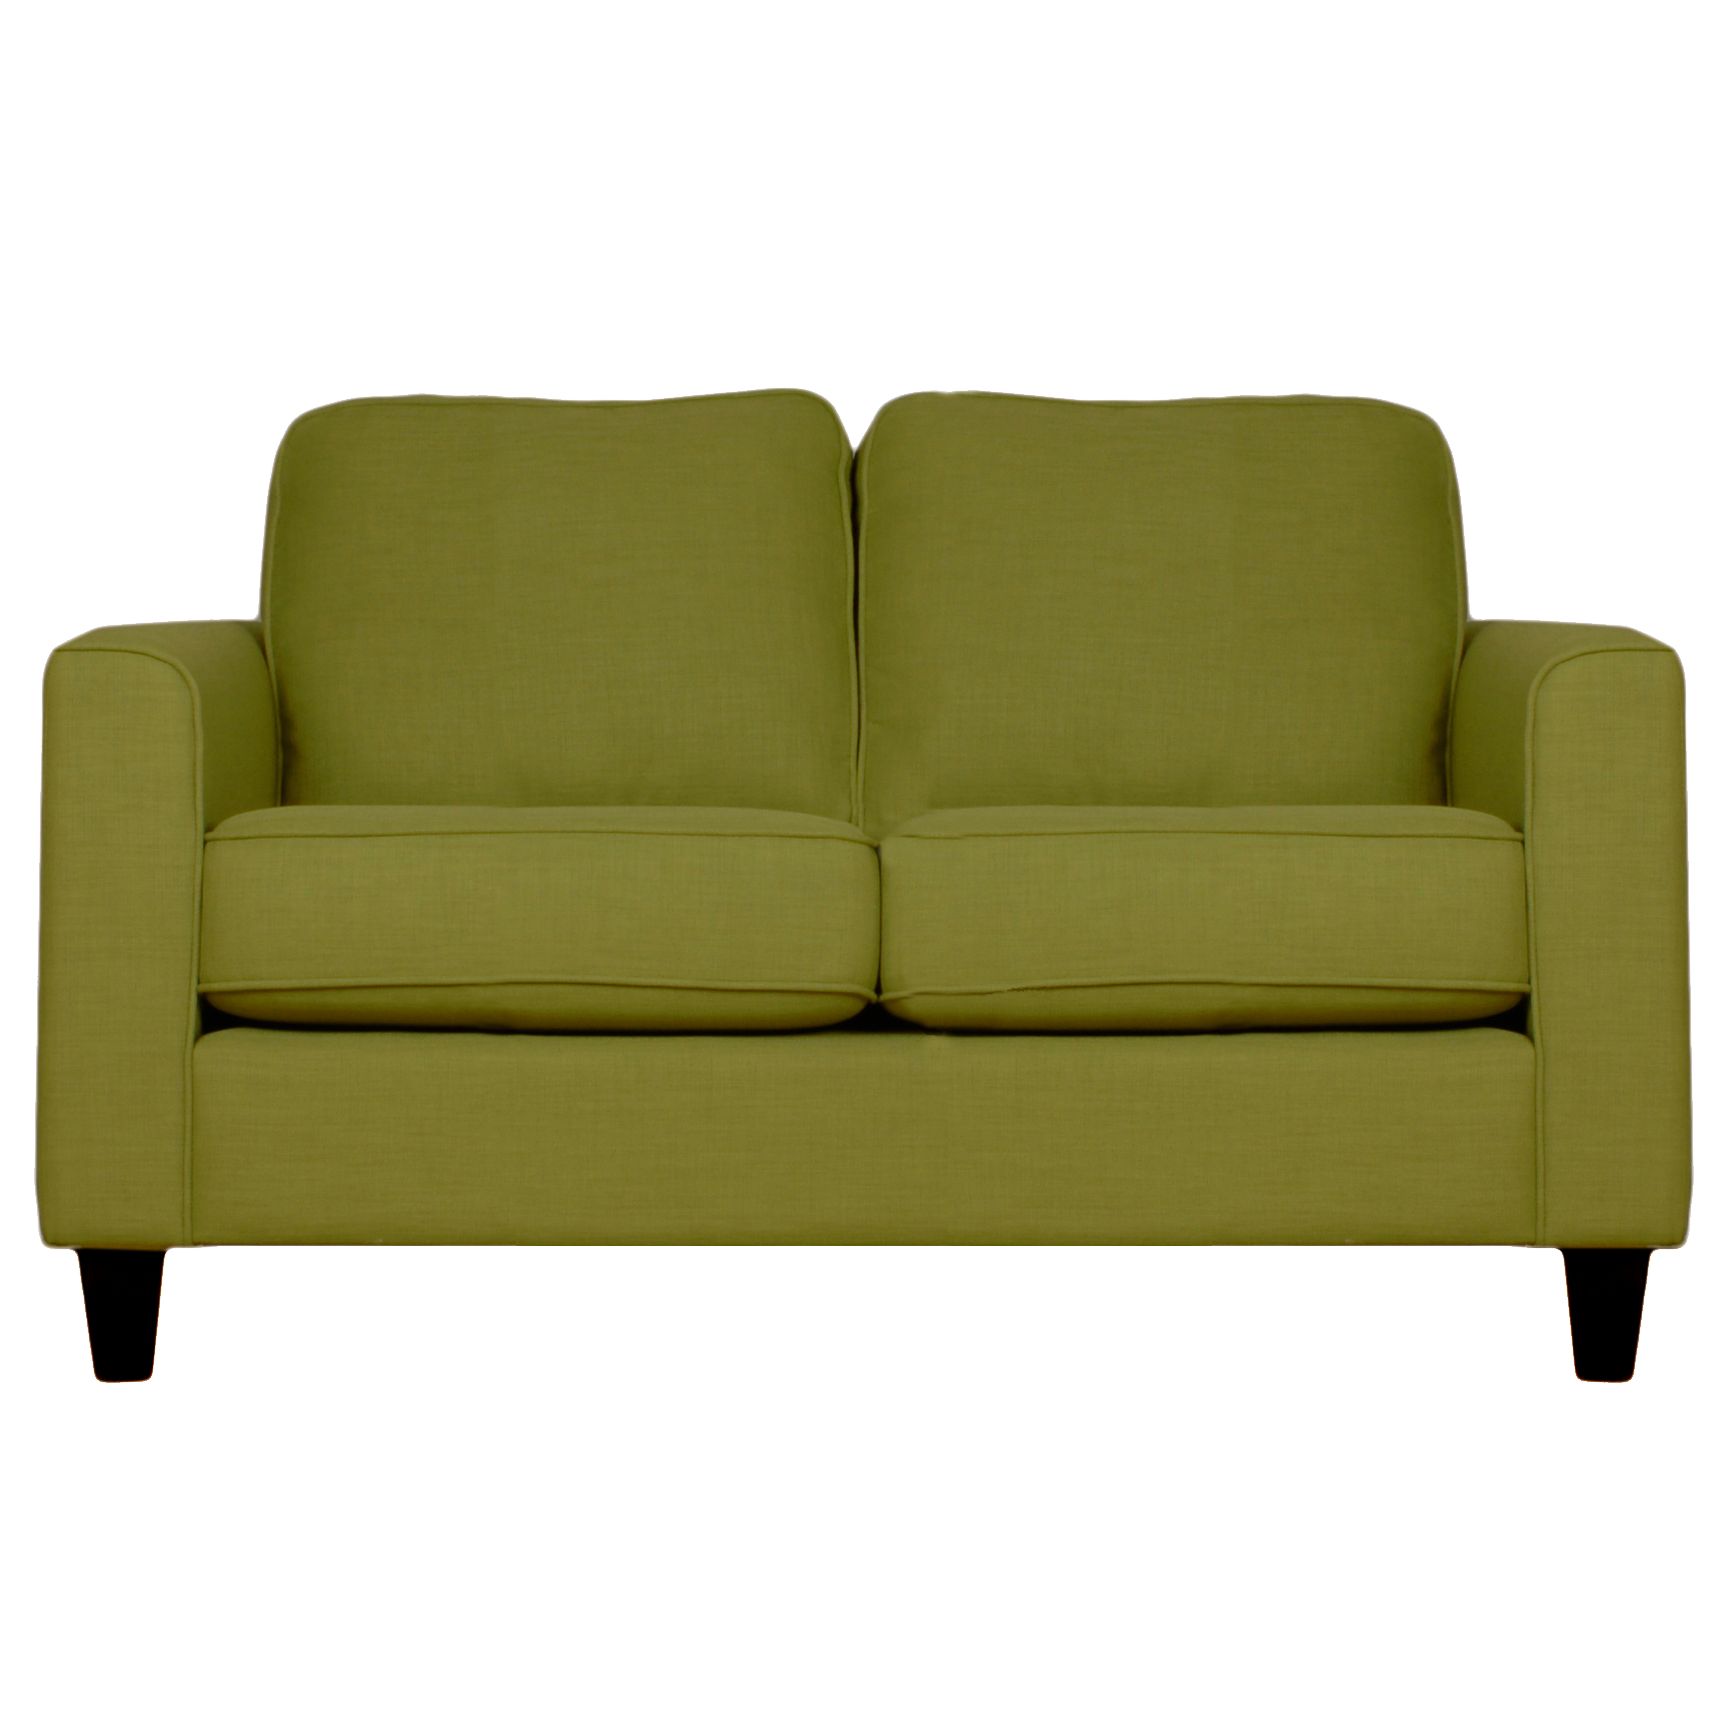 John Lewis Portia Small Sofa, Olive / Dark Leg